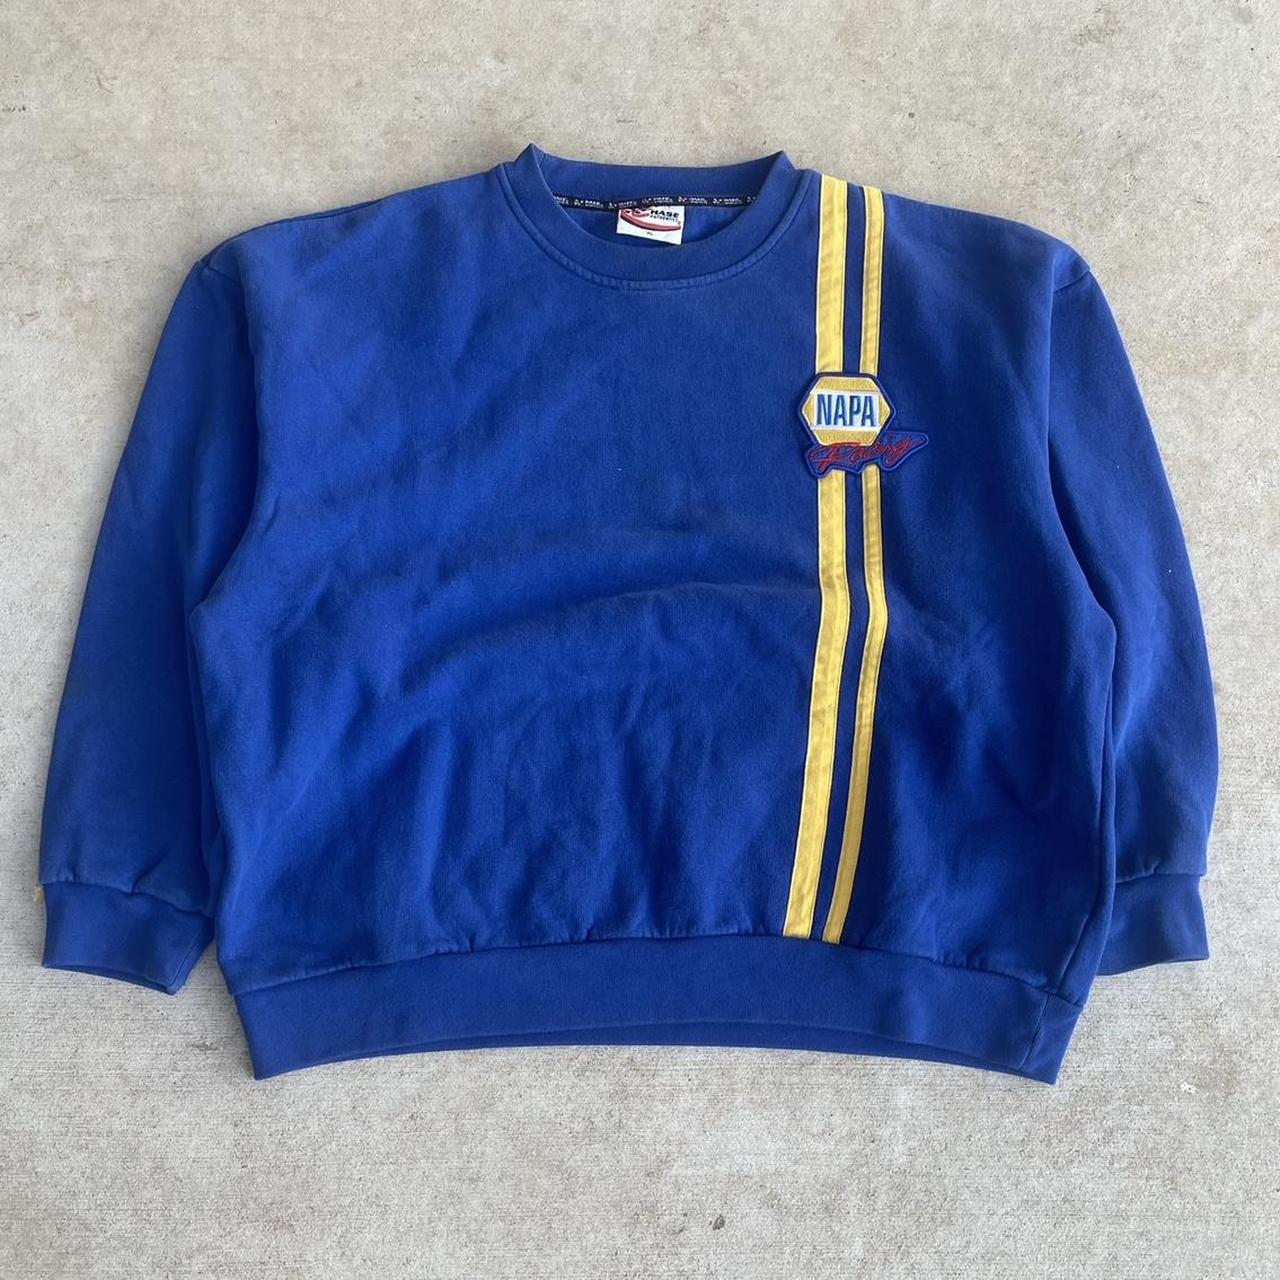 Chase Authentics Men's Blue Sweatshirt